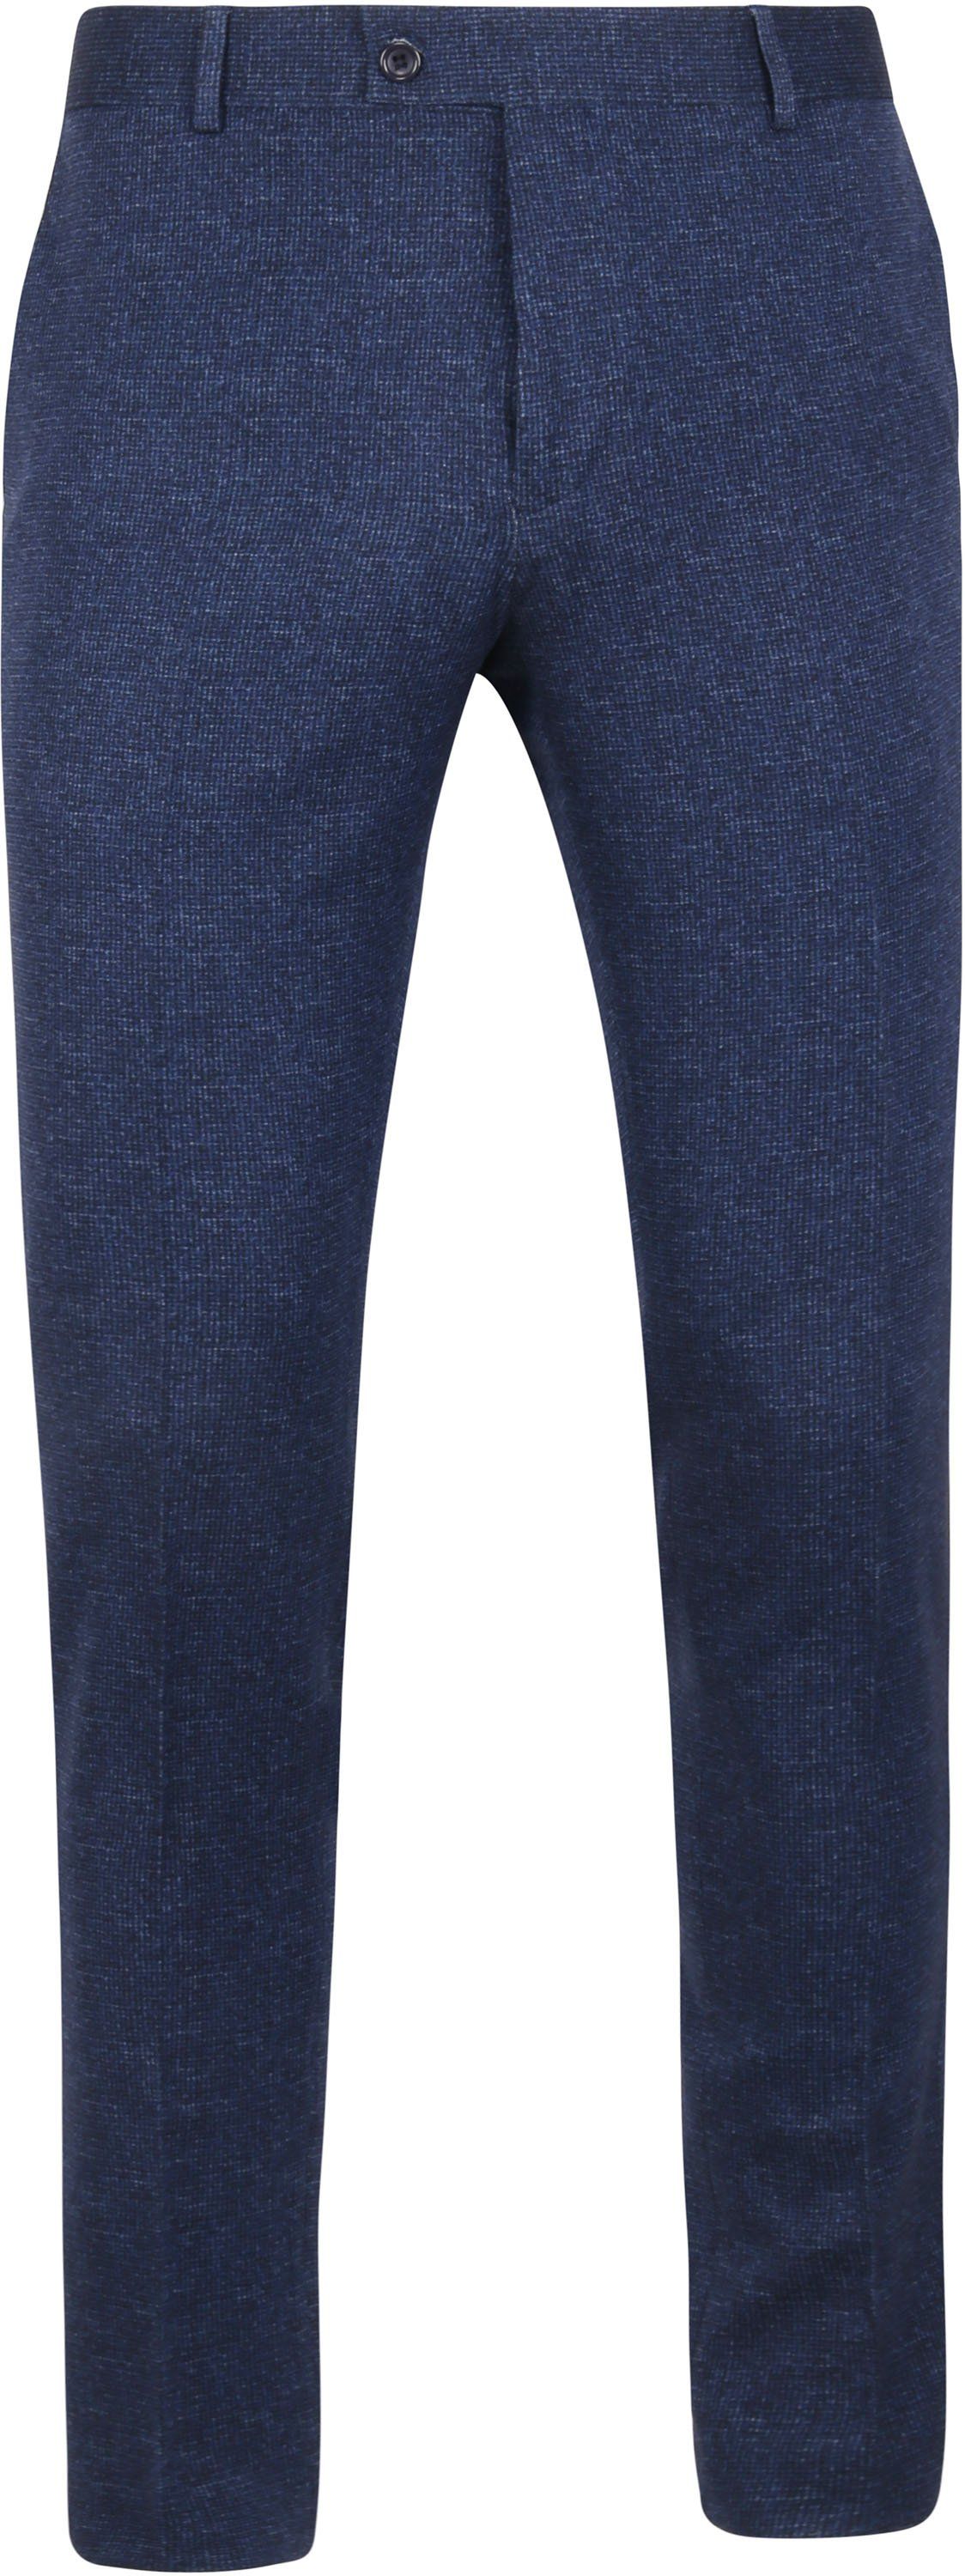 Suitable Pantalon Jersey Melange Navy Blue Dark Blue size W 32/33